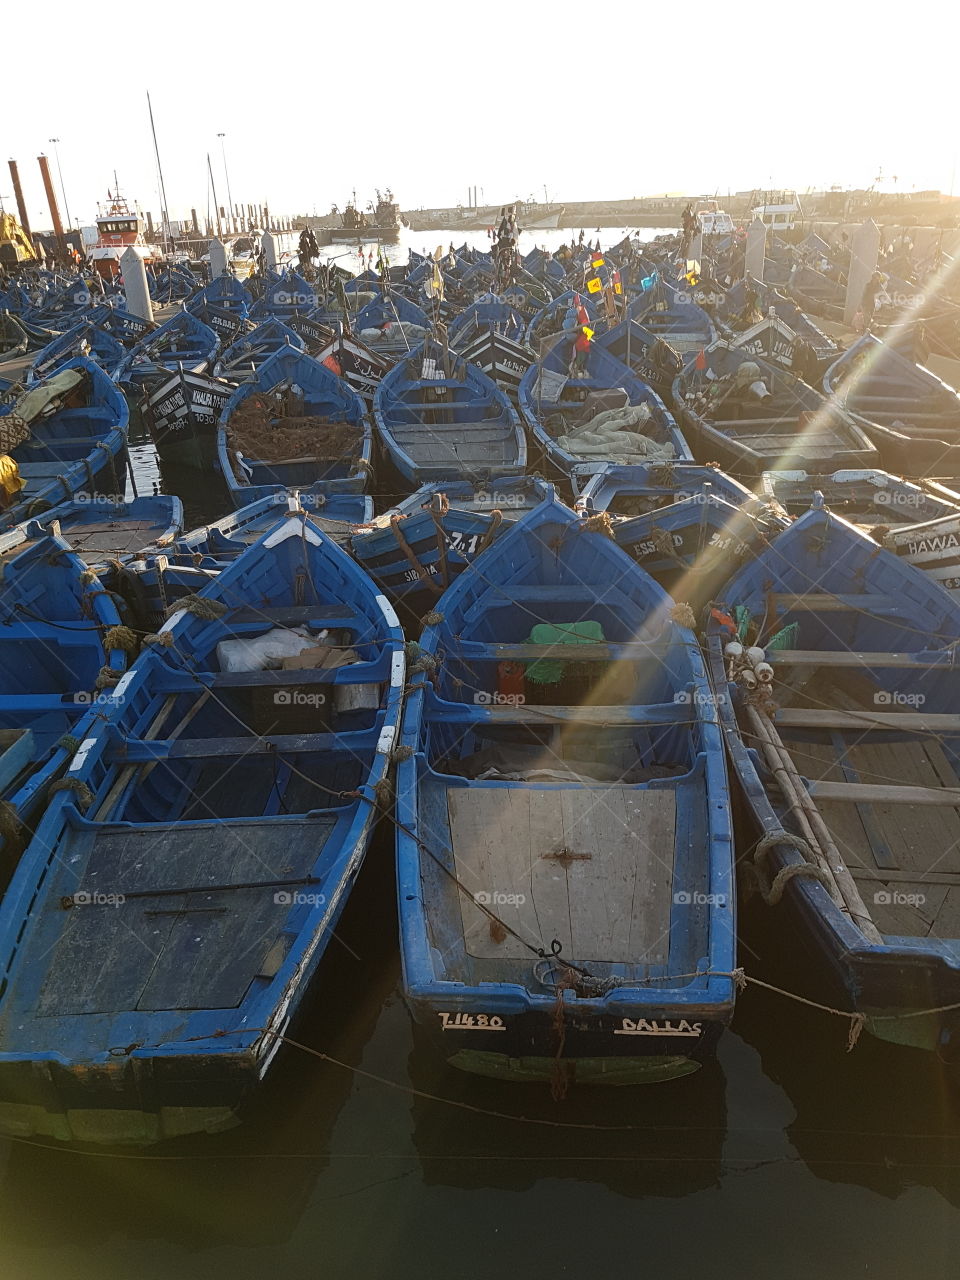 resting boats in the Essaouira port